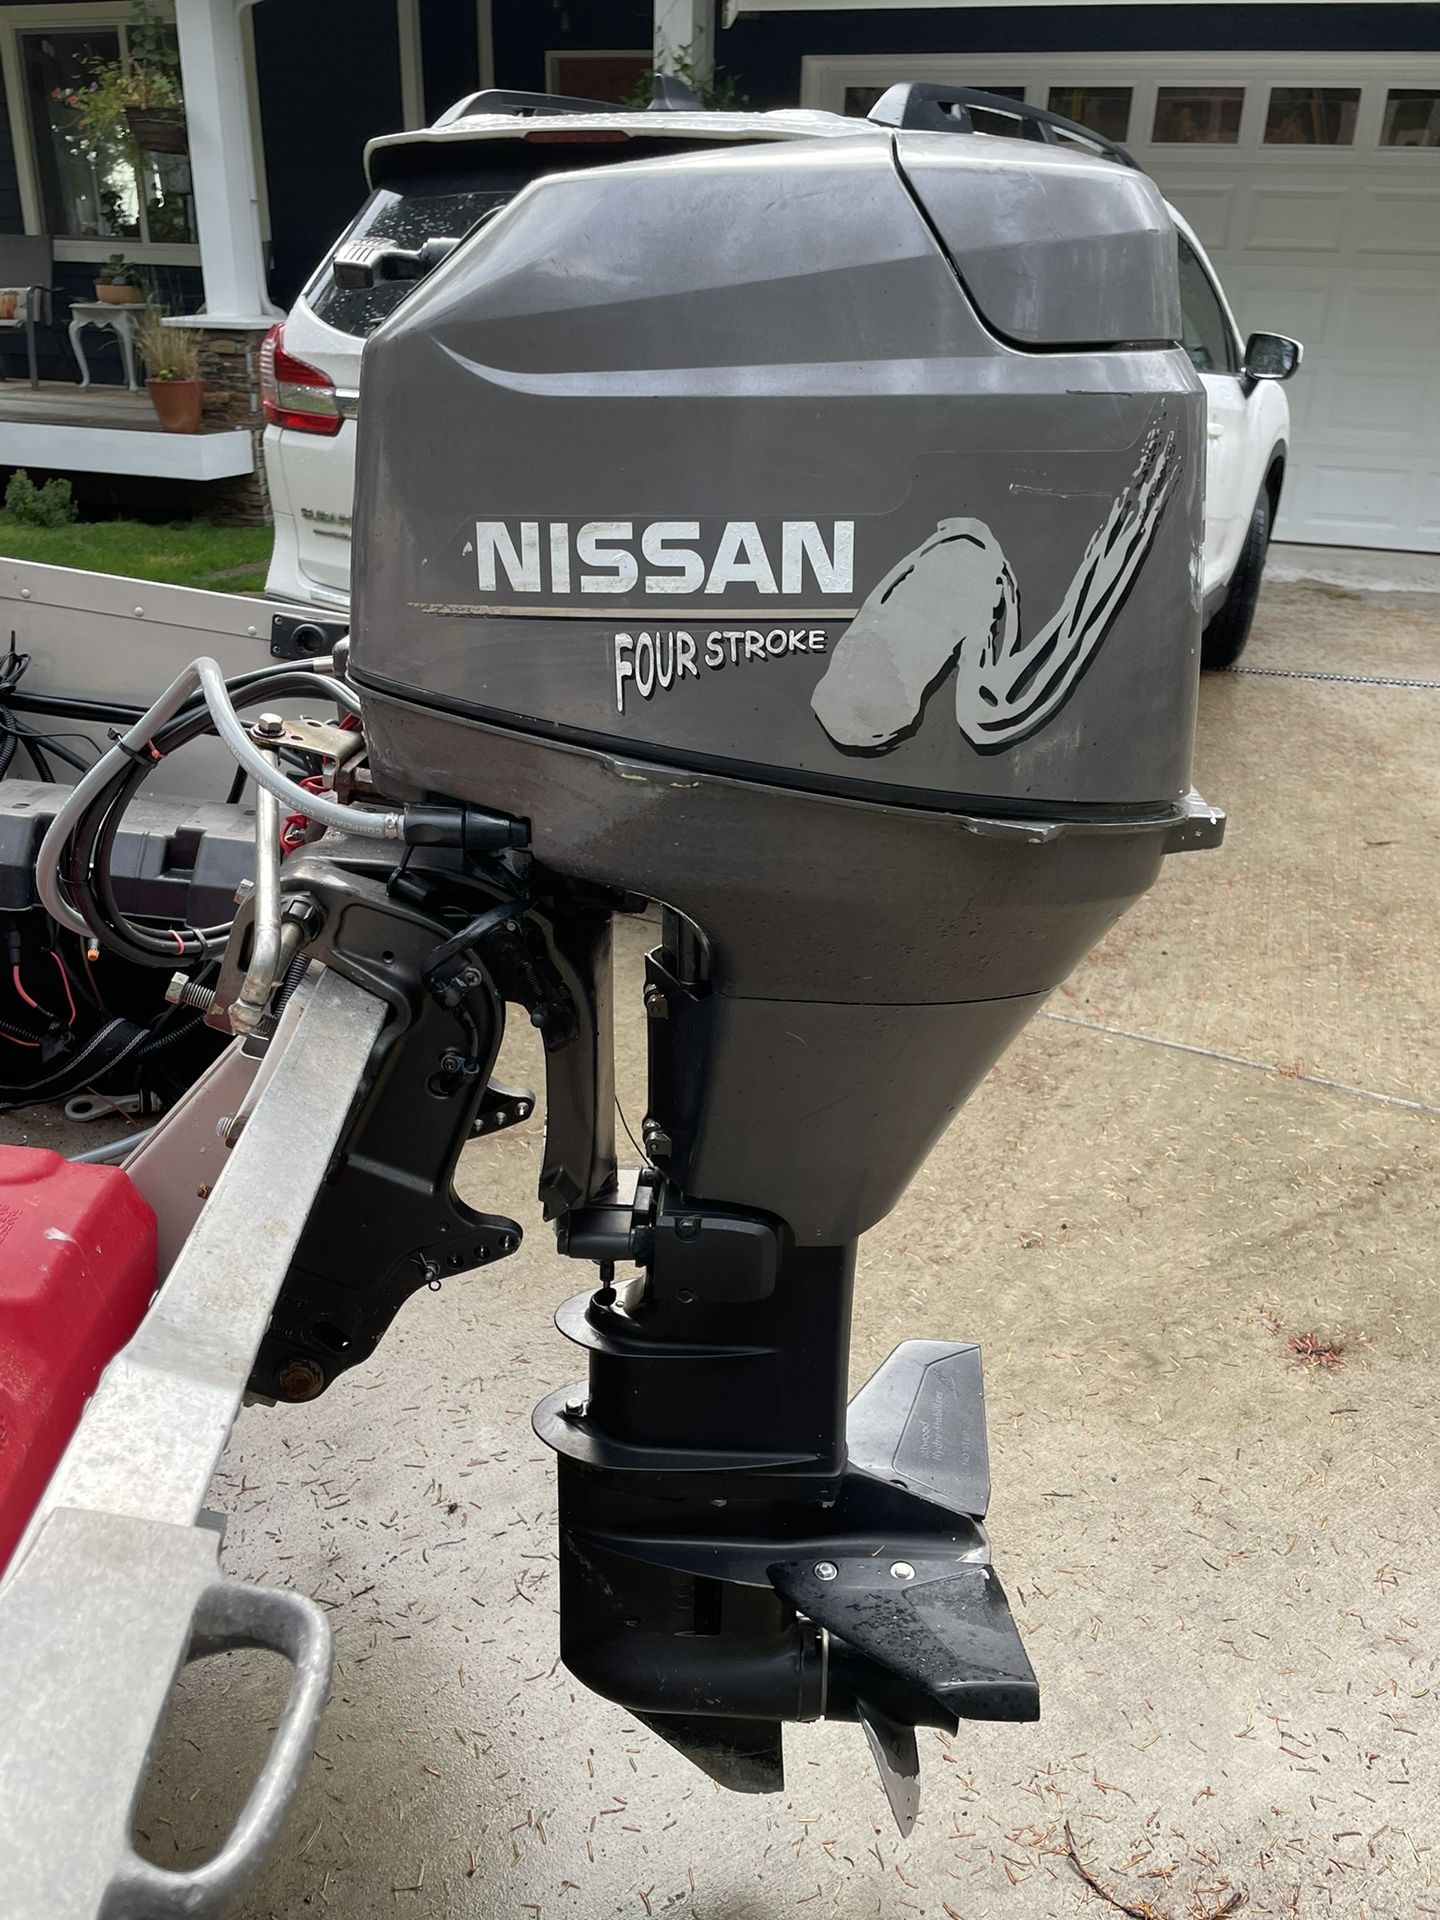 25hp Nissan Outboard Motor